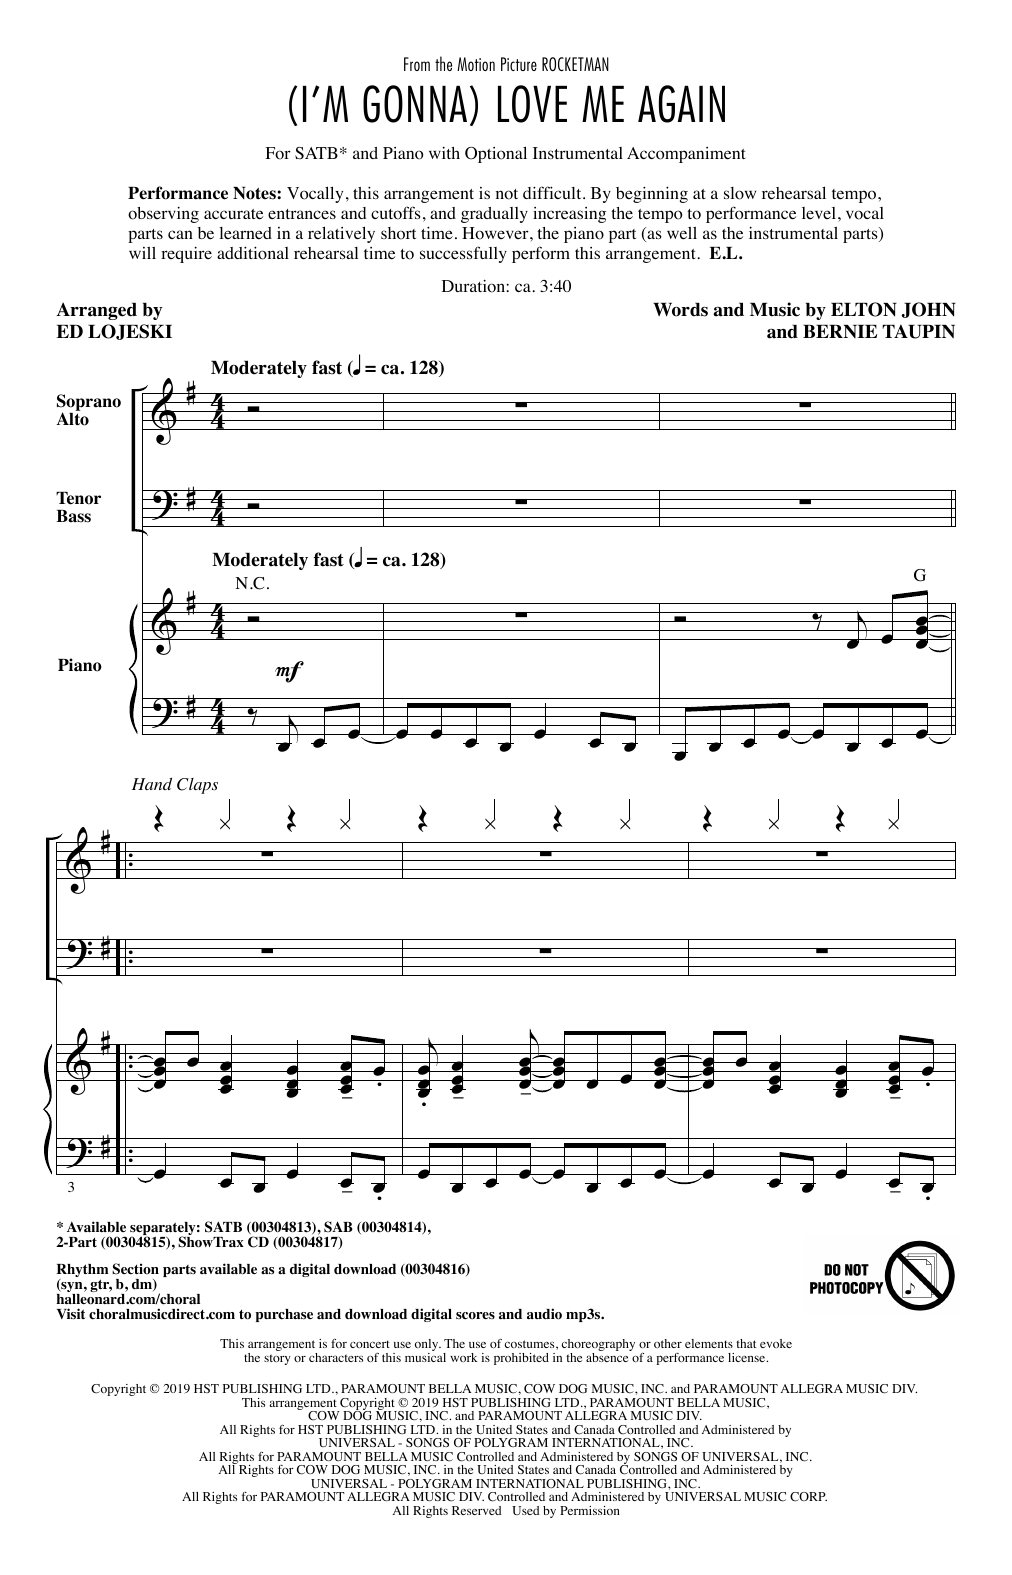 Elton John & Taron Egerton (I'm Gonna) Love Me Again (from Rocketman) (arr. Ed Lojeski) Sheet Music Notes & Chords for SATB Choir - Download or Print PDF